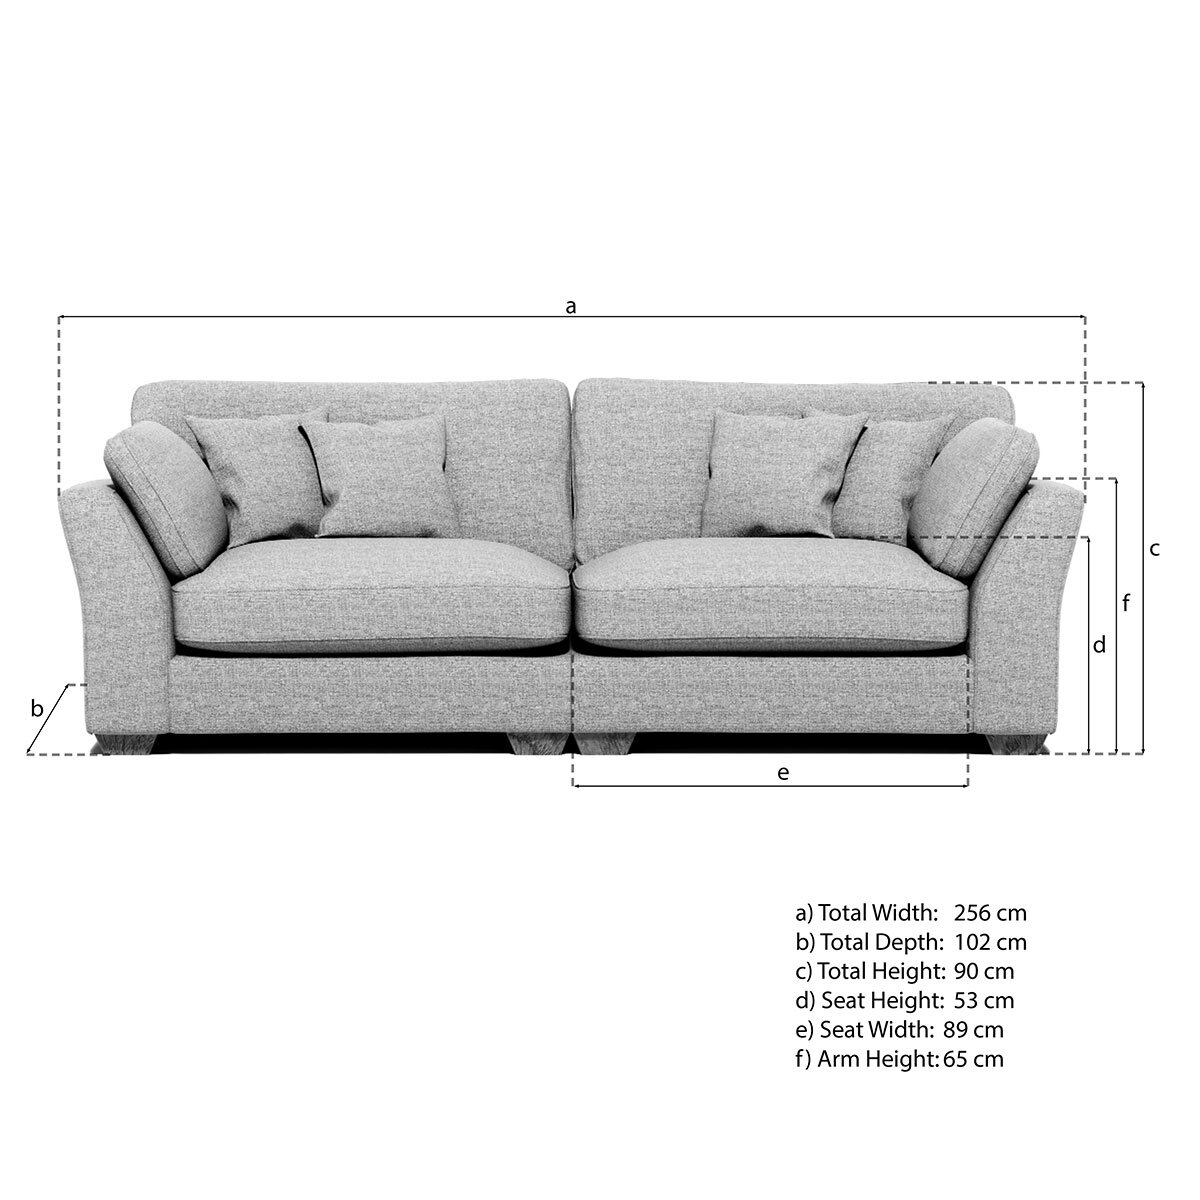 Selsey Grey Fabric 4 Seater Split Sofa